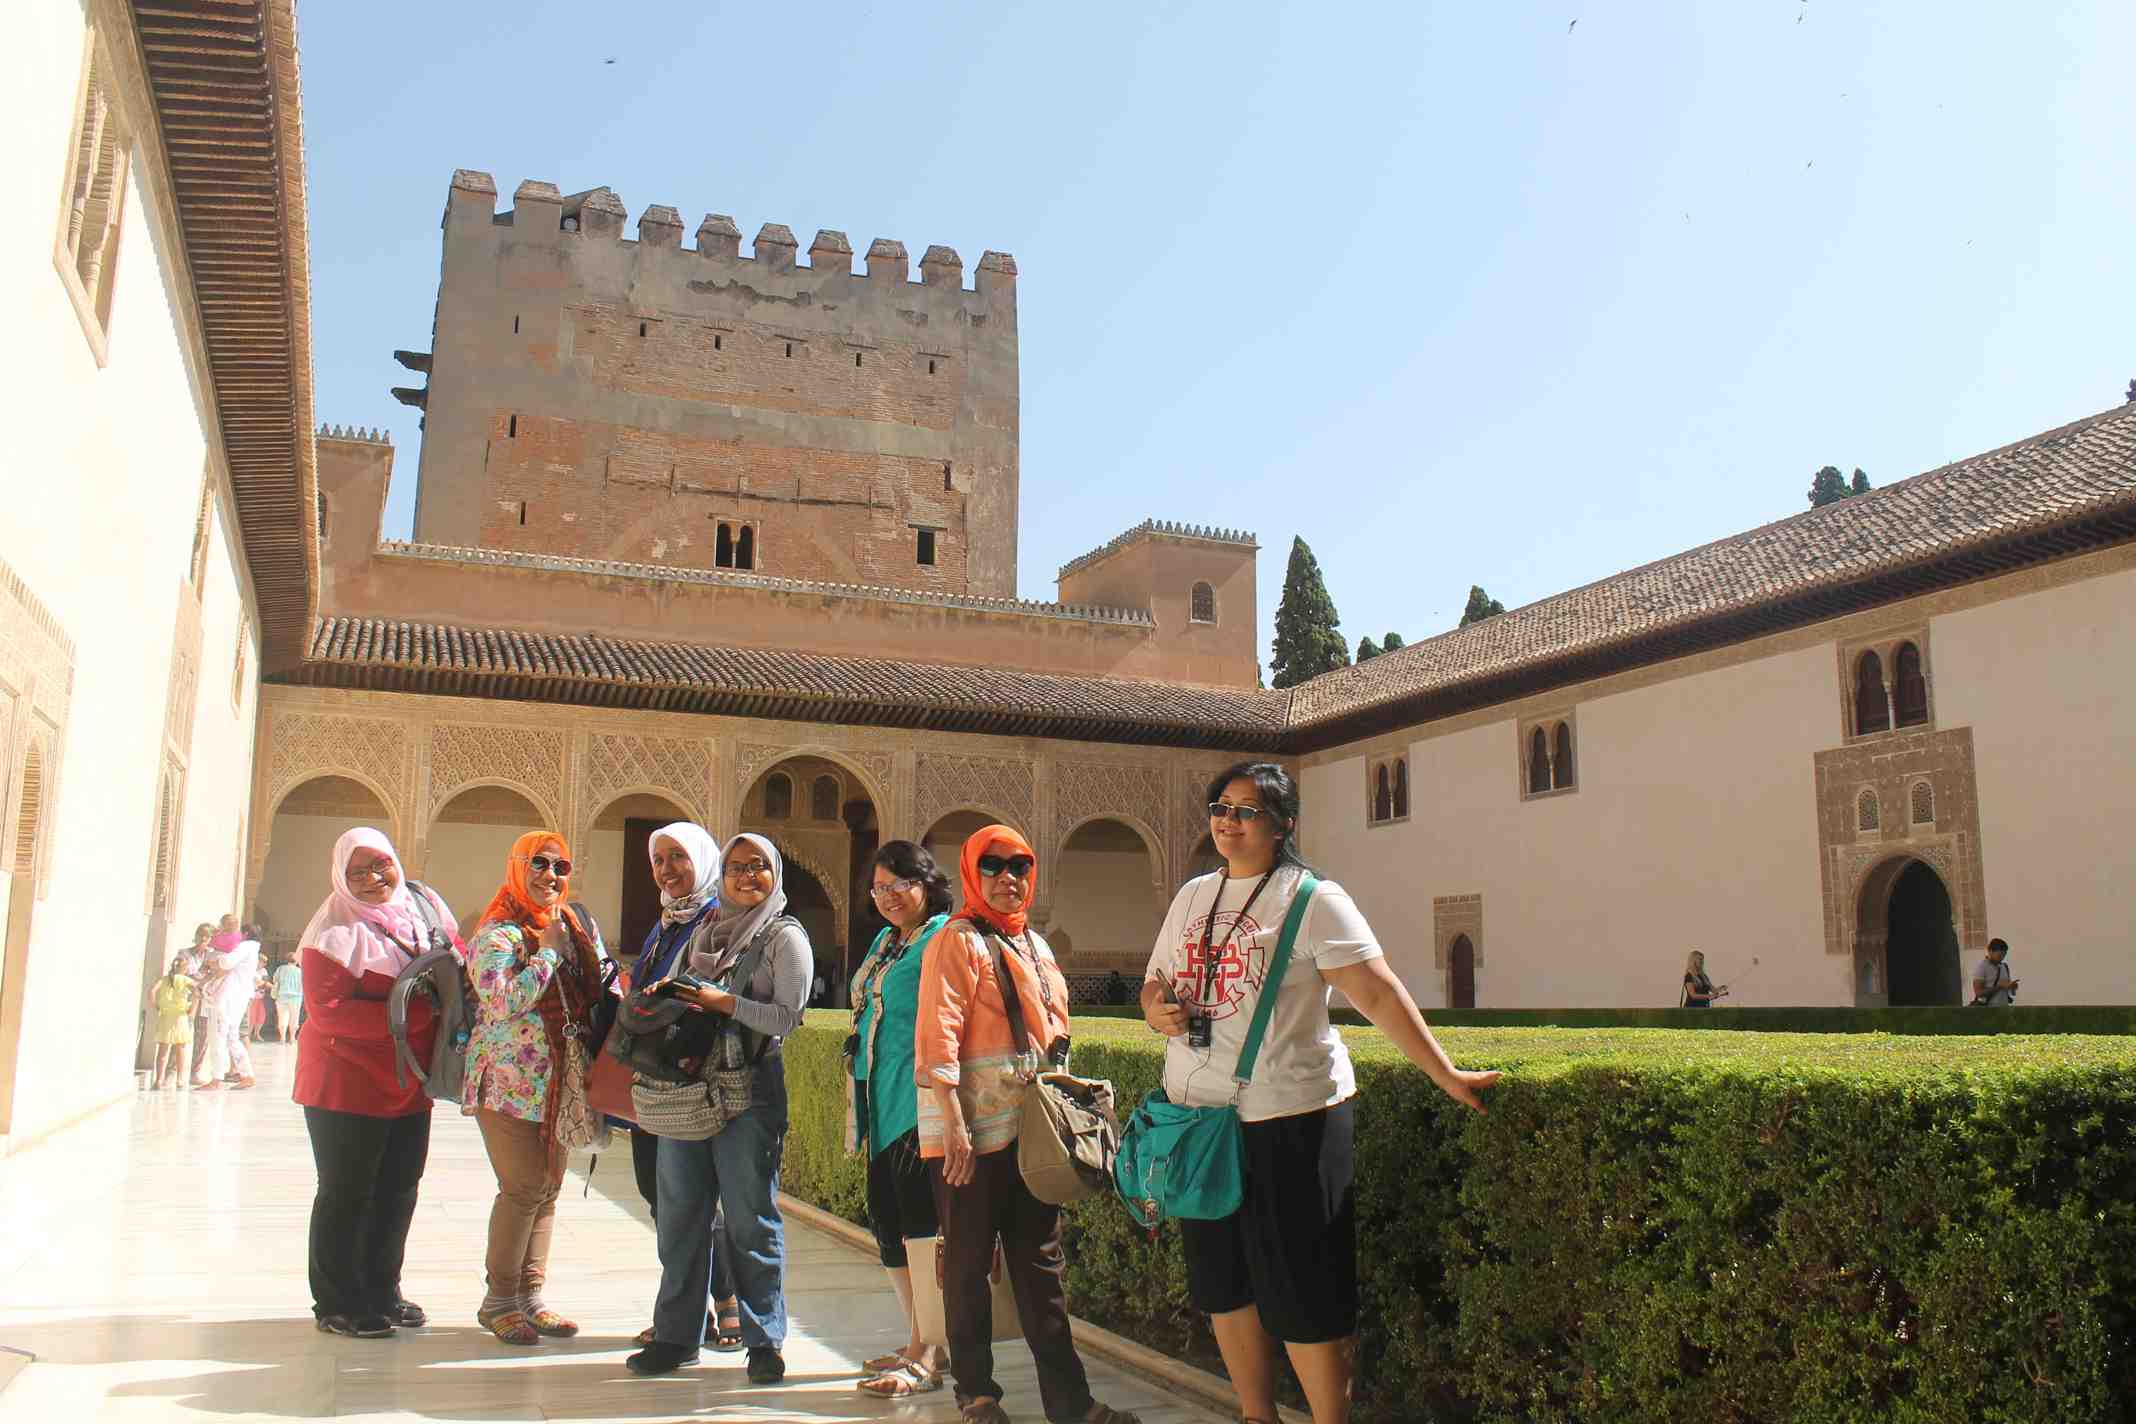 Alhambra Tour - Muslim Women Travelers - Andalusia